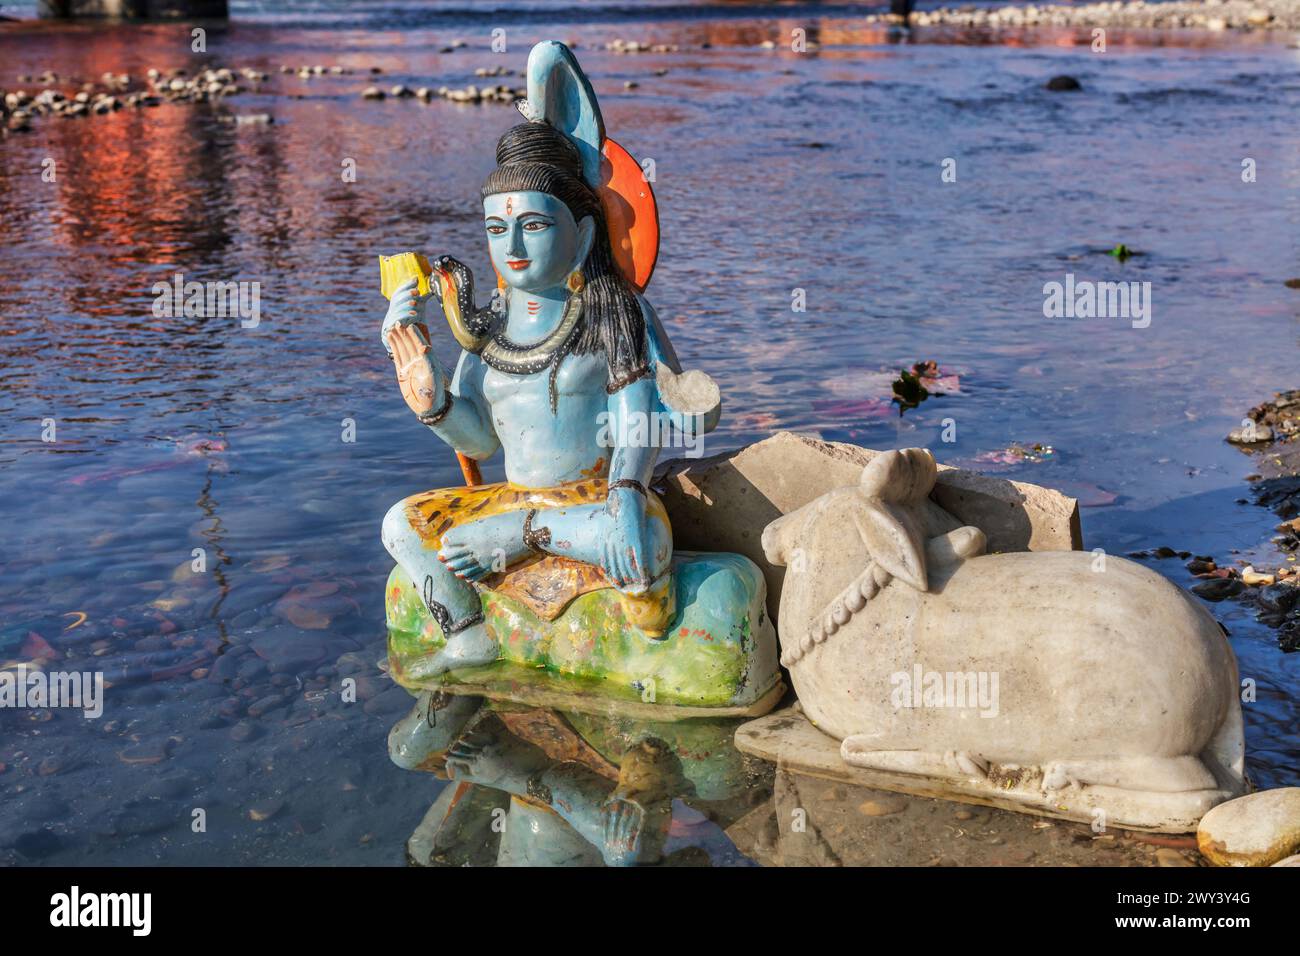 Lord Shiva statue, Ganges river, Haridwar, Uttarakhand, India Stock Photo